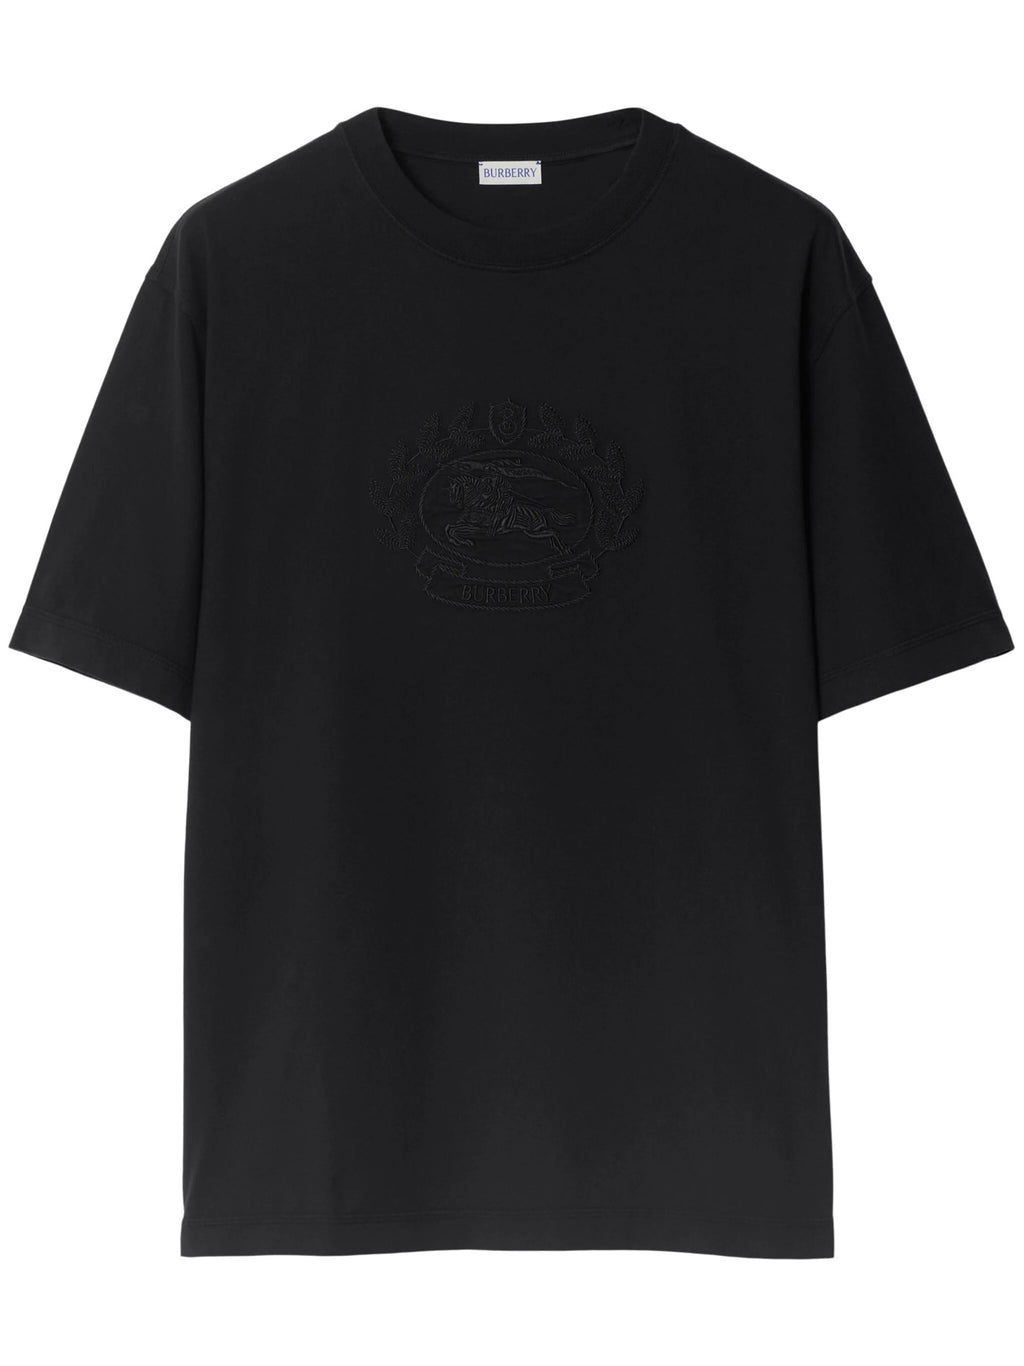 BURBERRY Men Cotton T-shirt